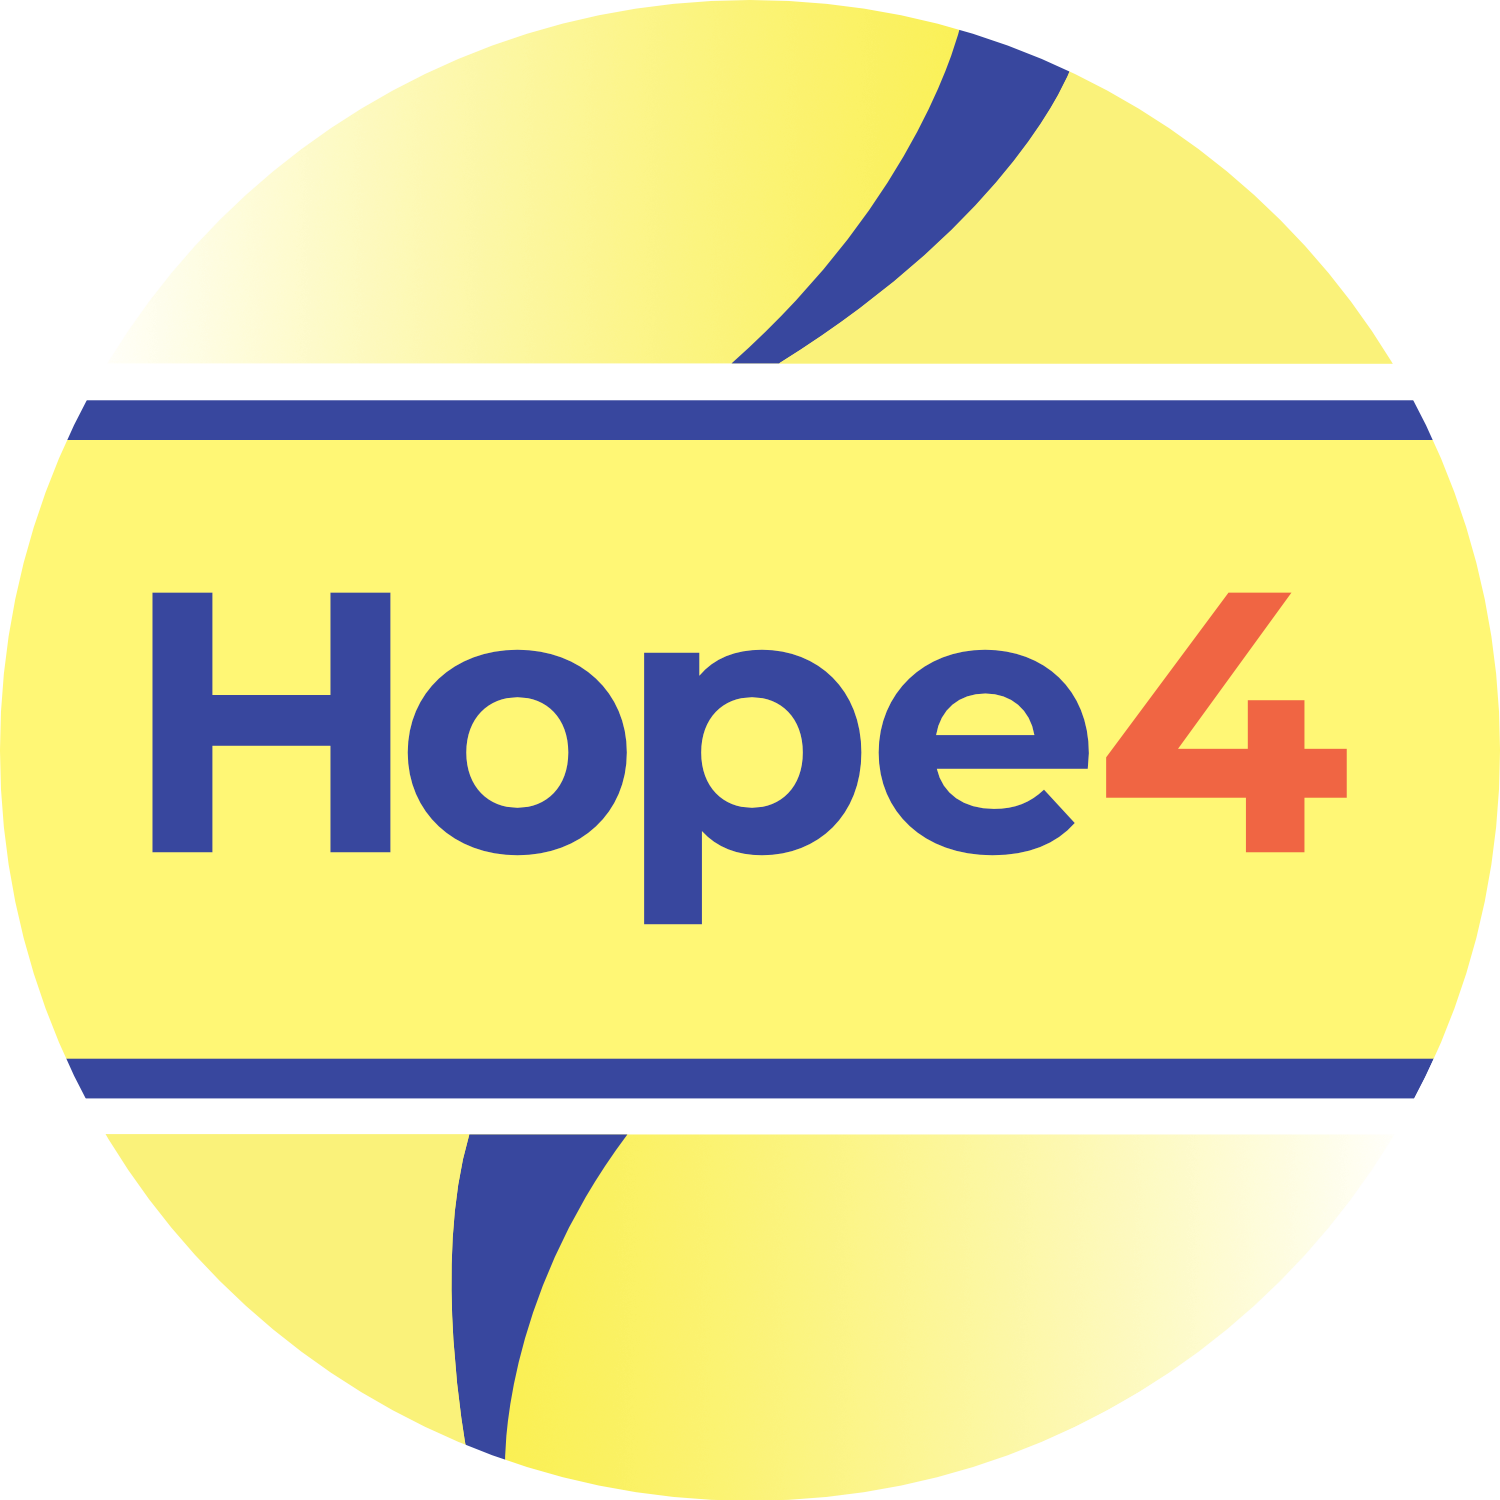 Hope4